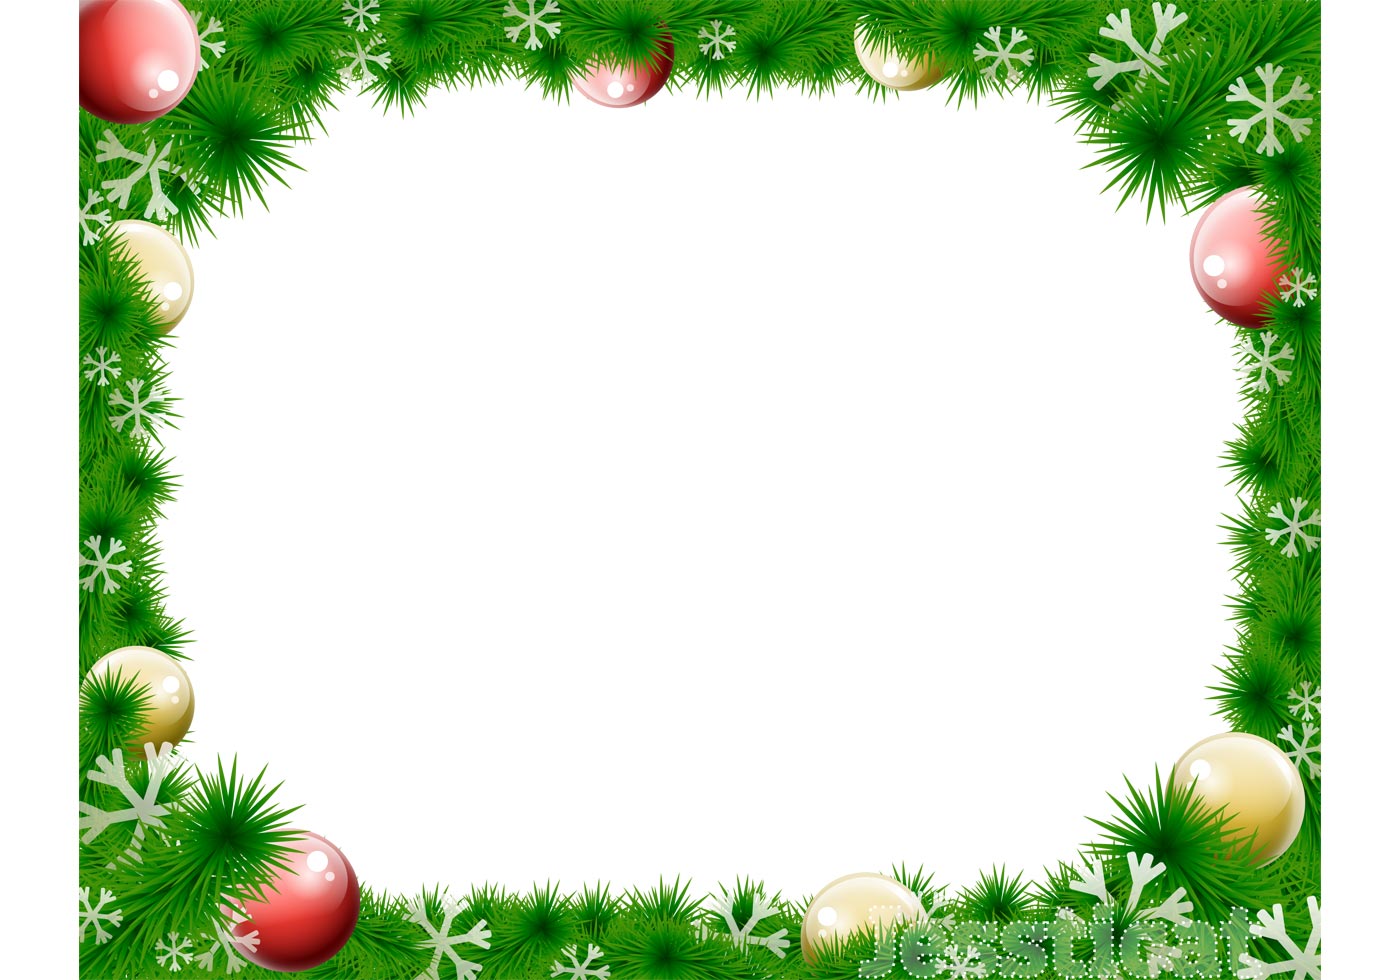 Christmas Wreath Vector Border | Free Vector Art at Vecteezy!